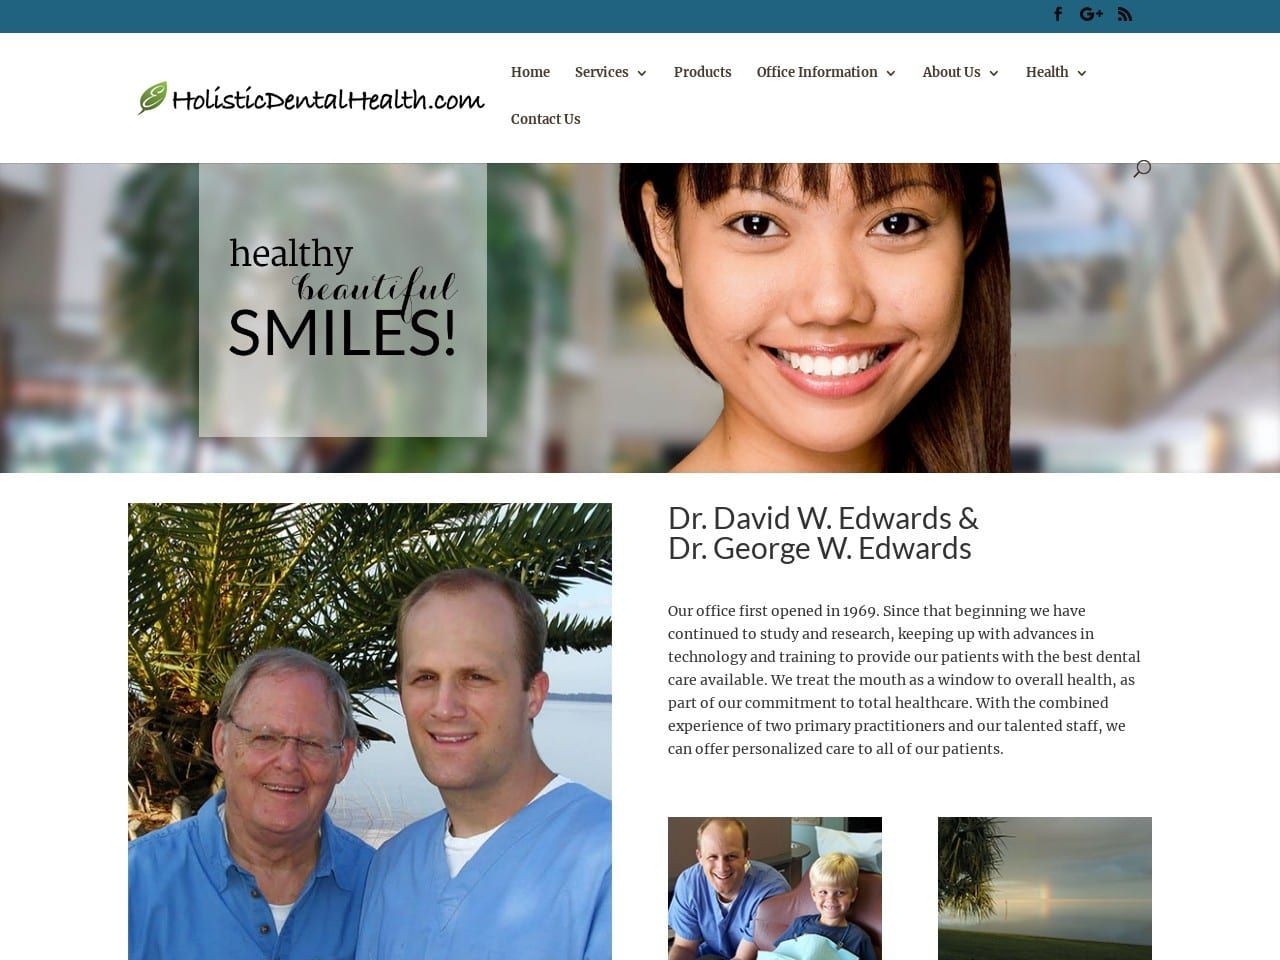 George W. Edwards DMD and David W. Edwards DMD Website Screenshot from holisticdentalhealth.com